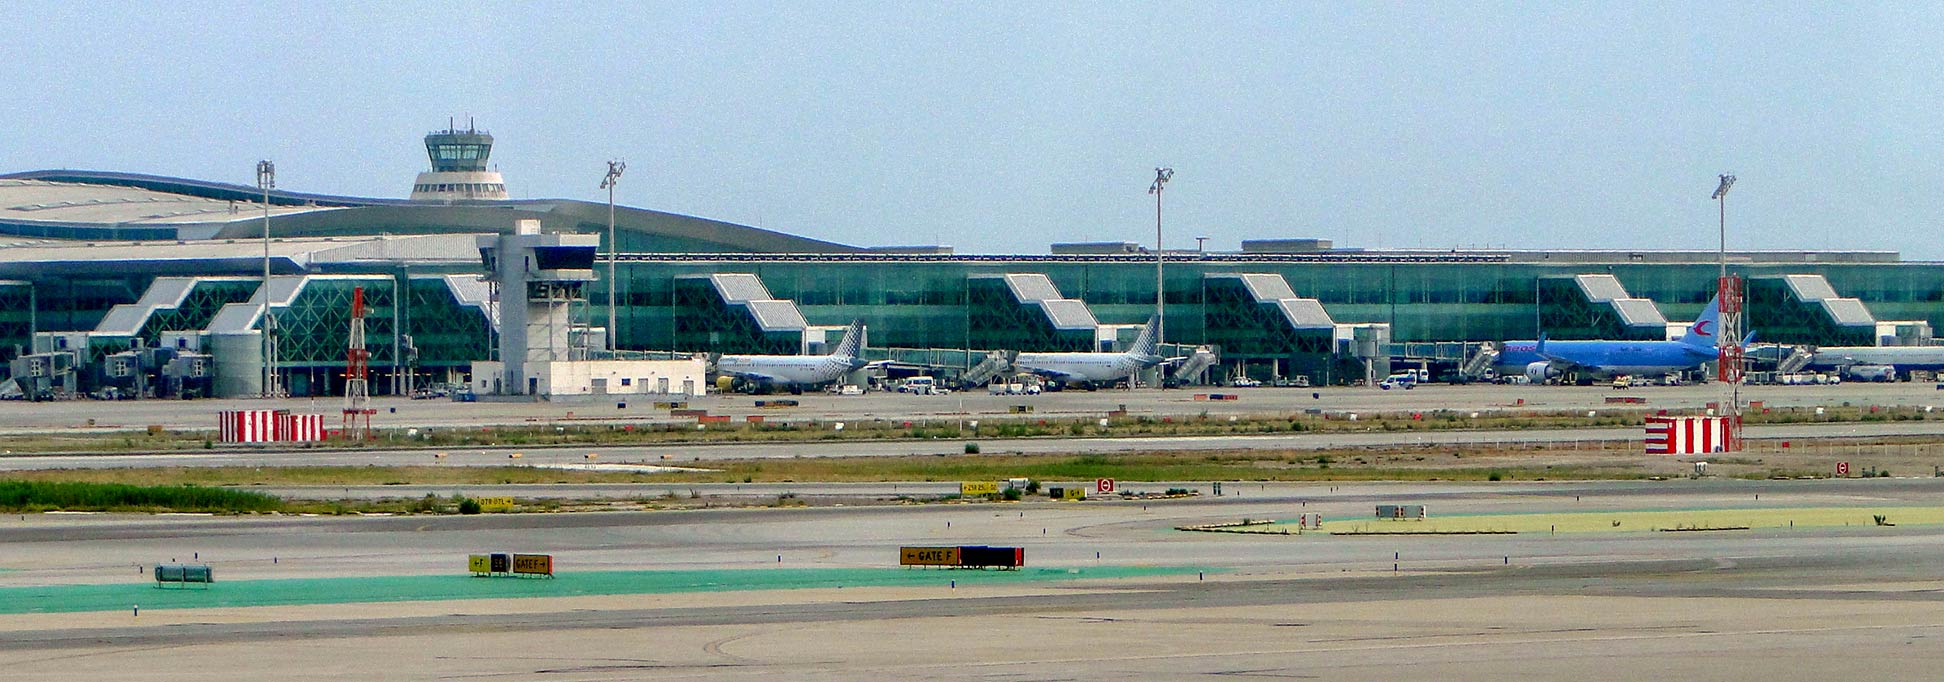 Barcelona–El Prat Airport, Spain